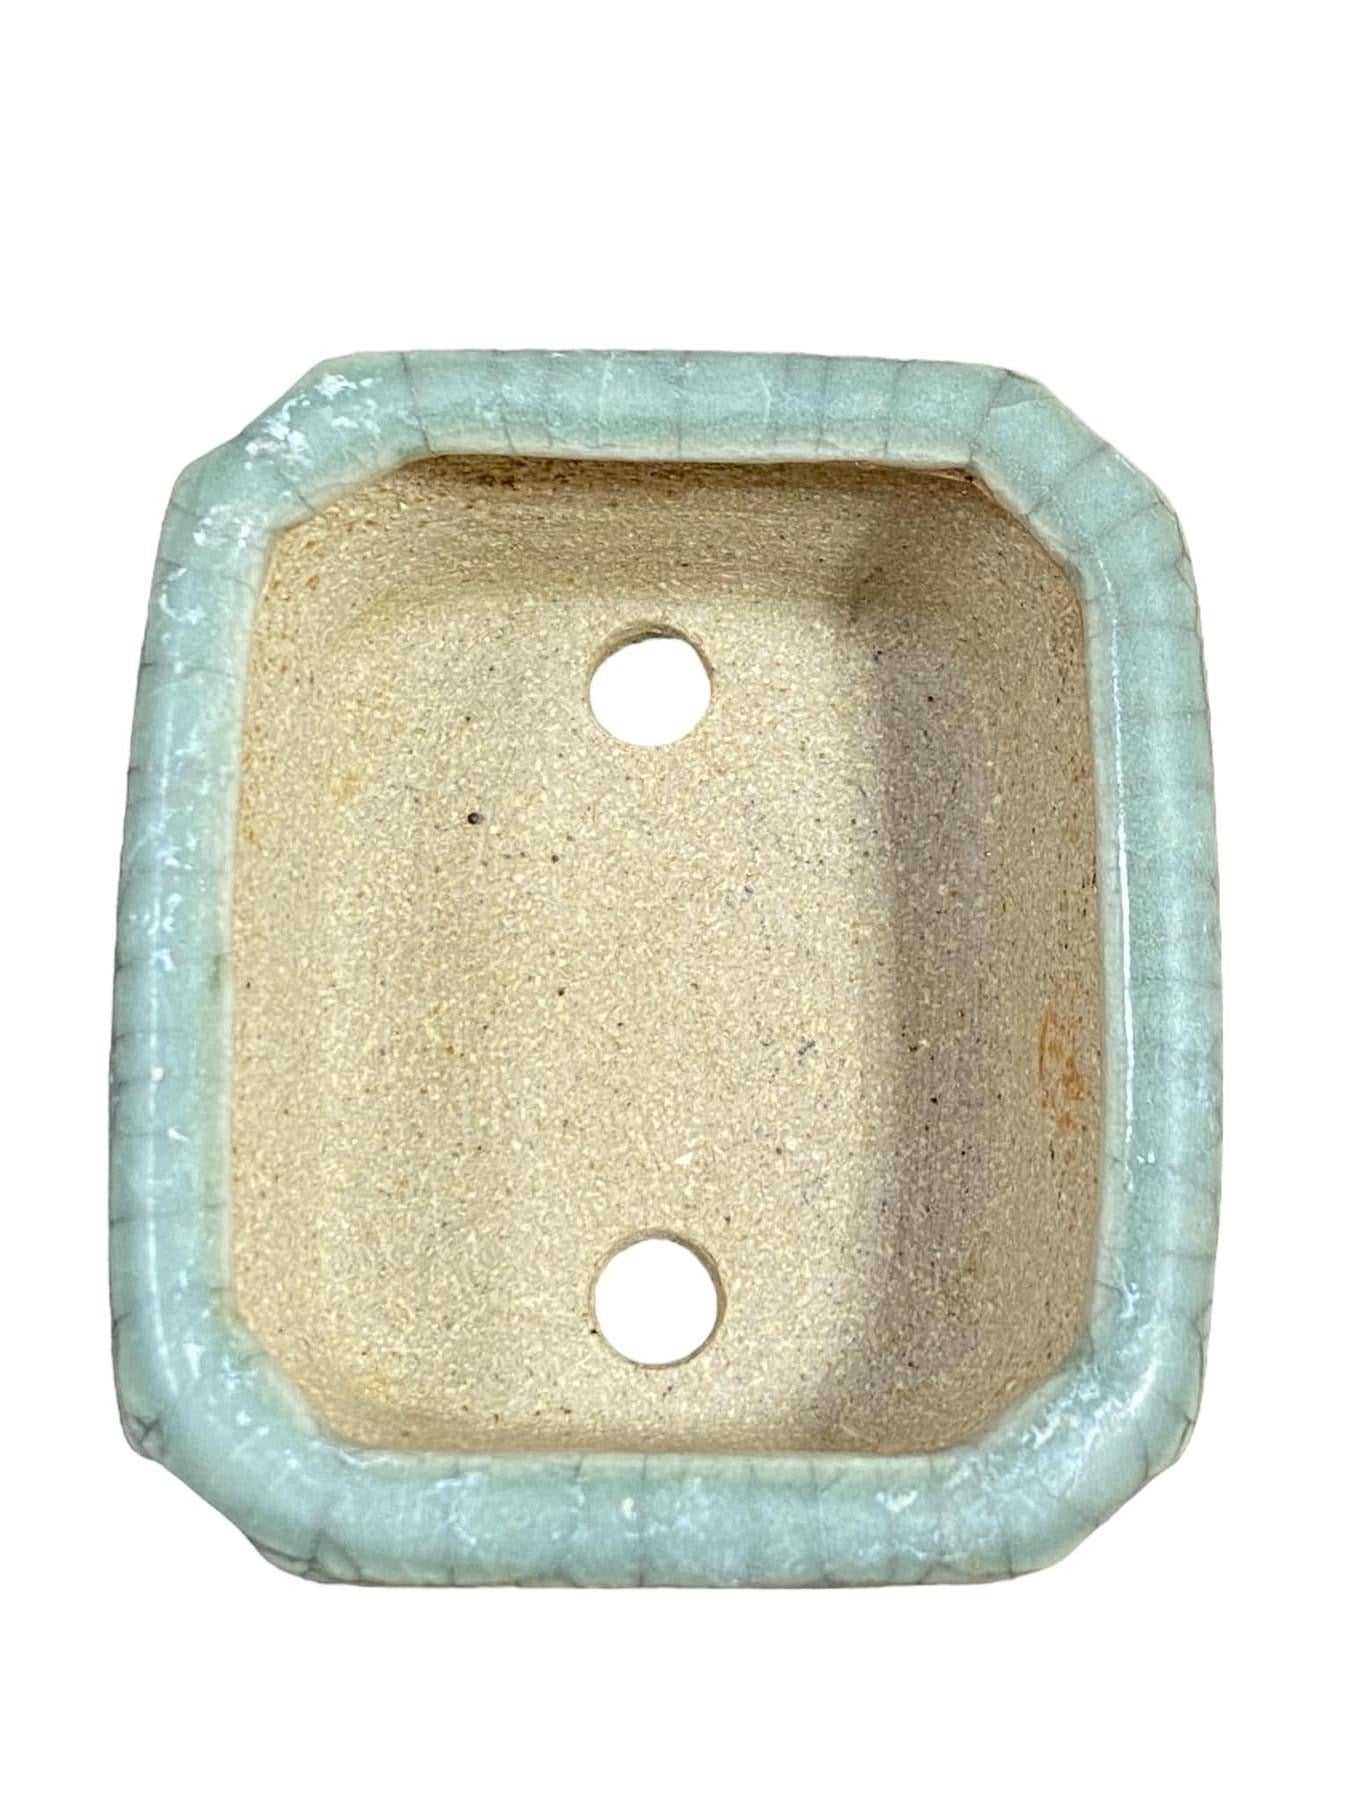 Eimei - Stellar Crackle Glazed Bonsai Pot with Patina (2-3/8” wide)